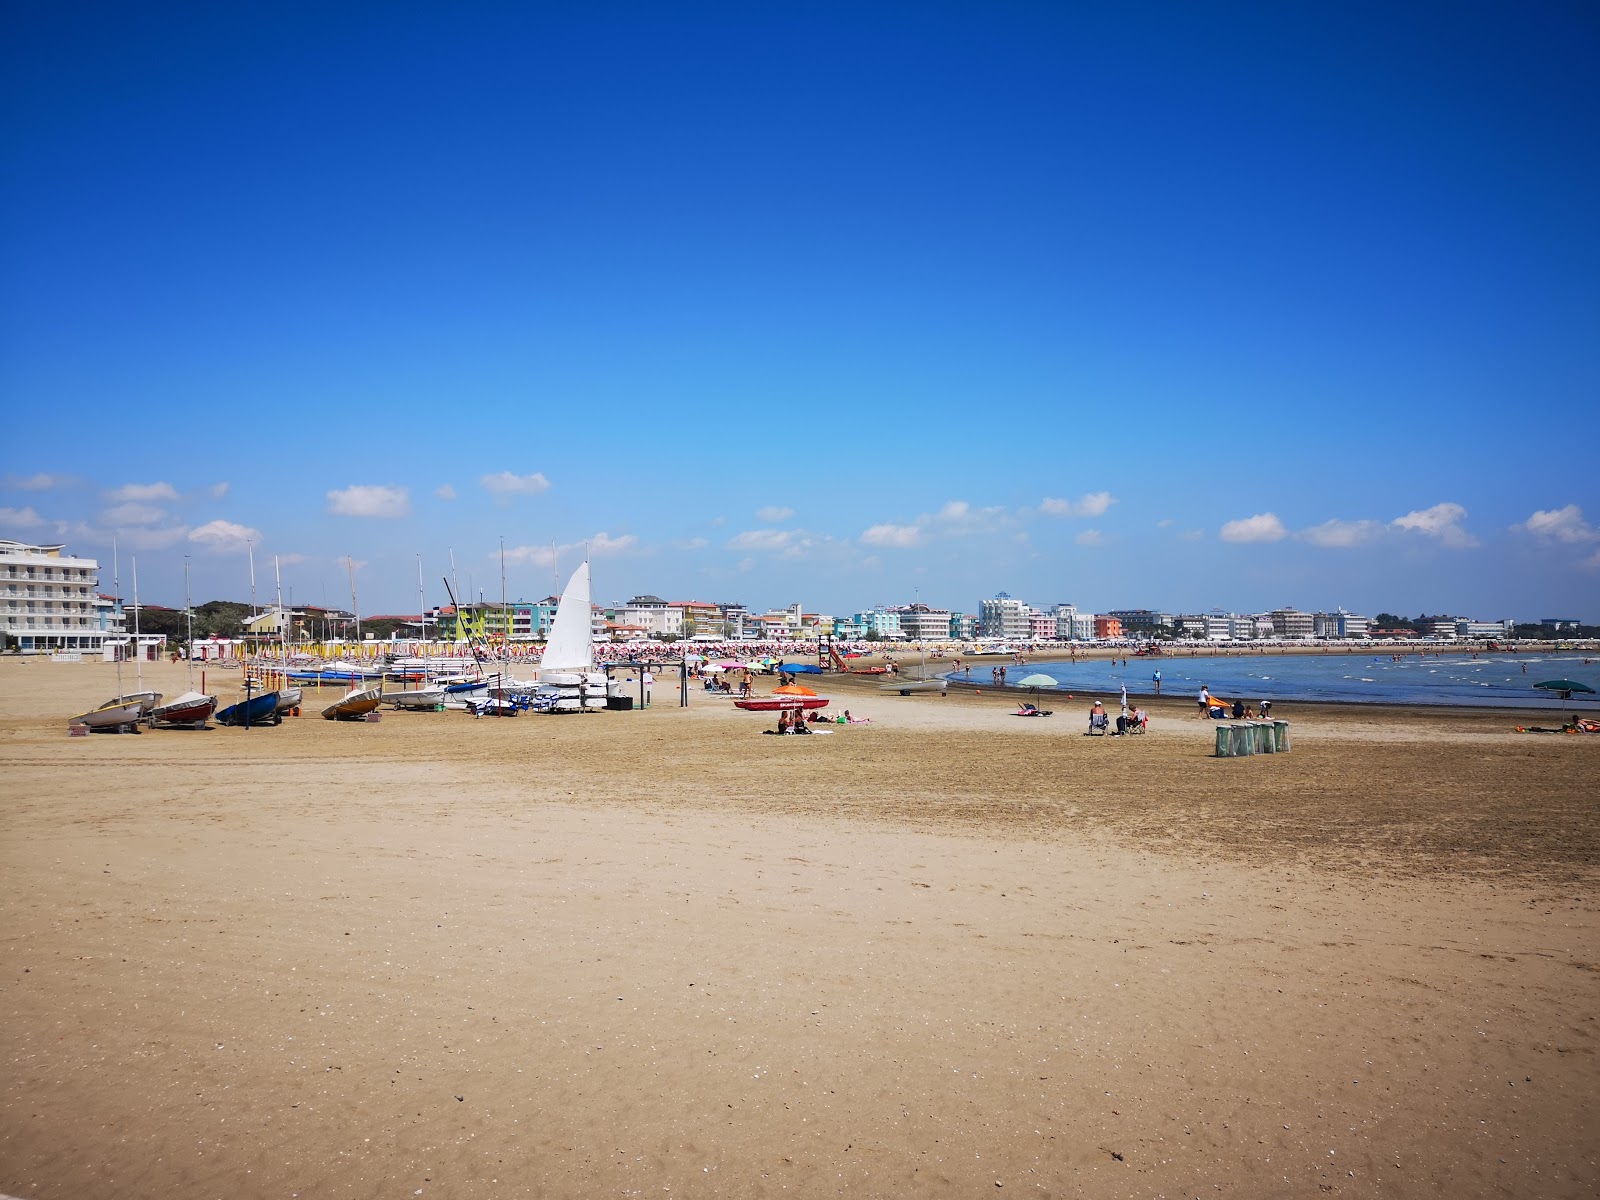 Foto af Spiaggia di Levante med turkis rent vand overflade